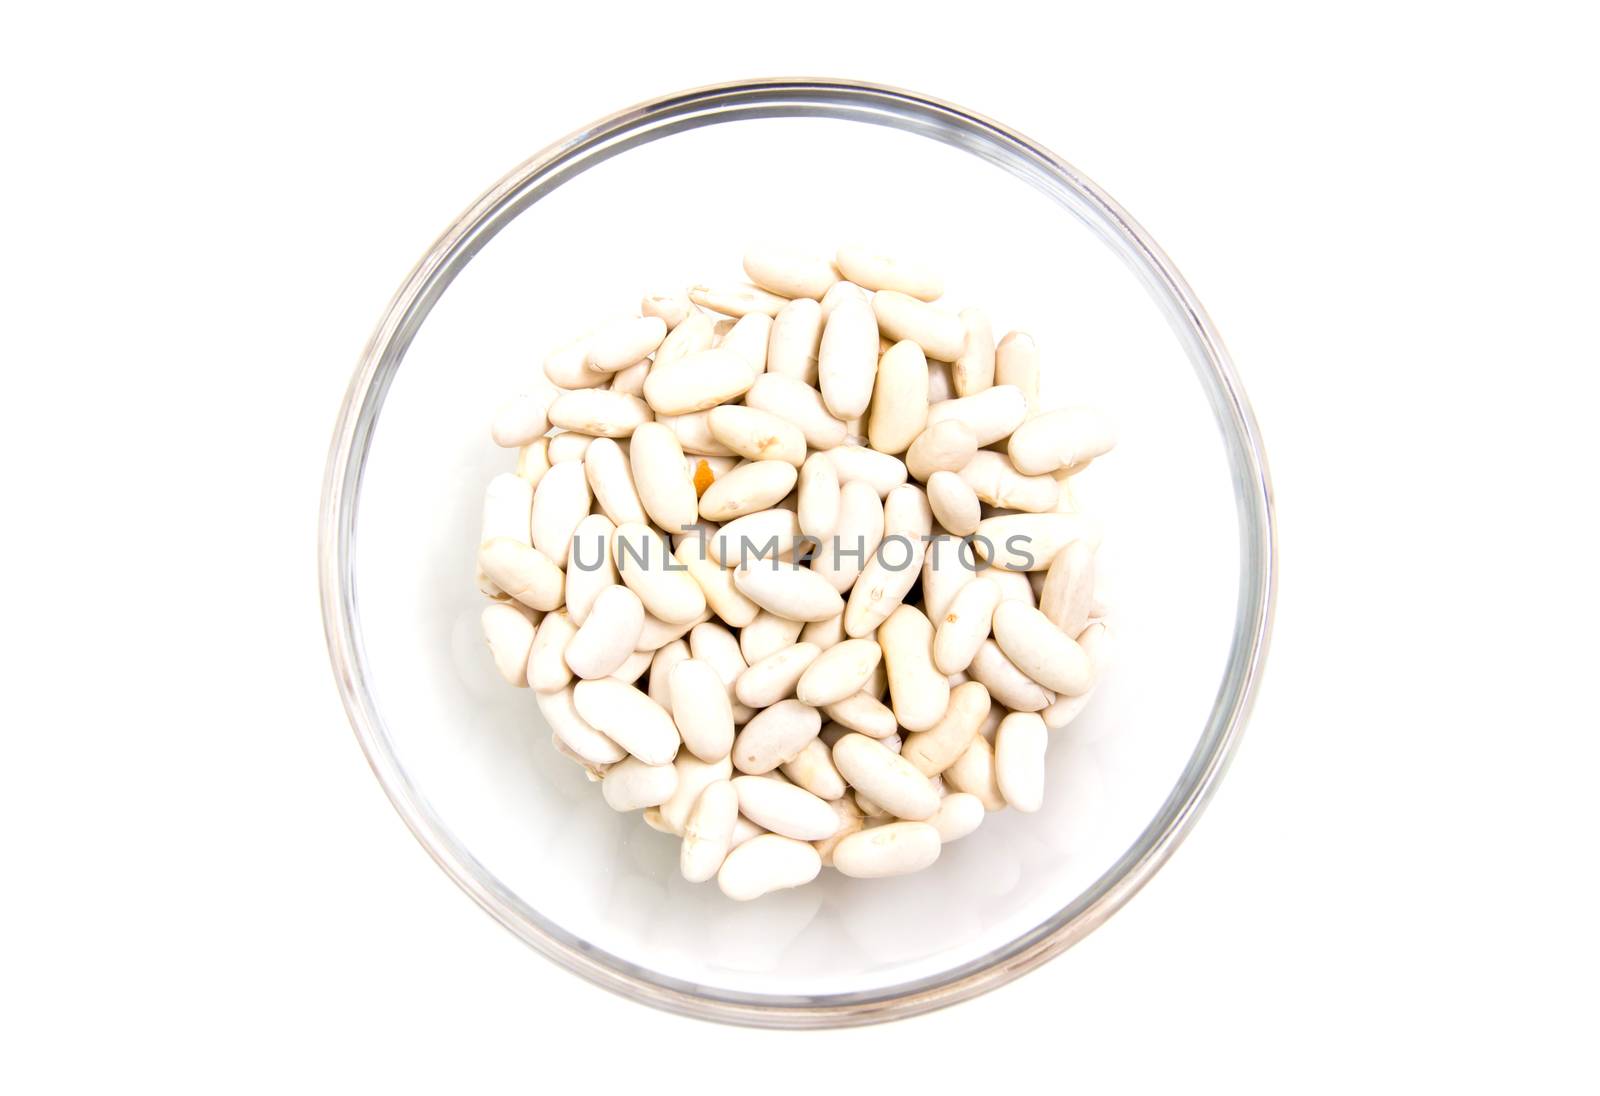 White beans in bowl on white background